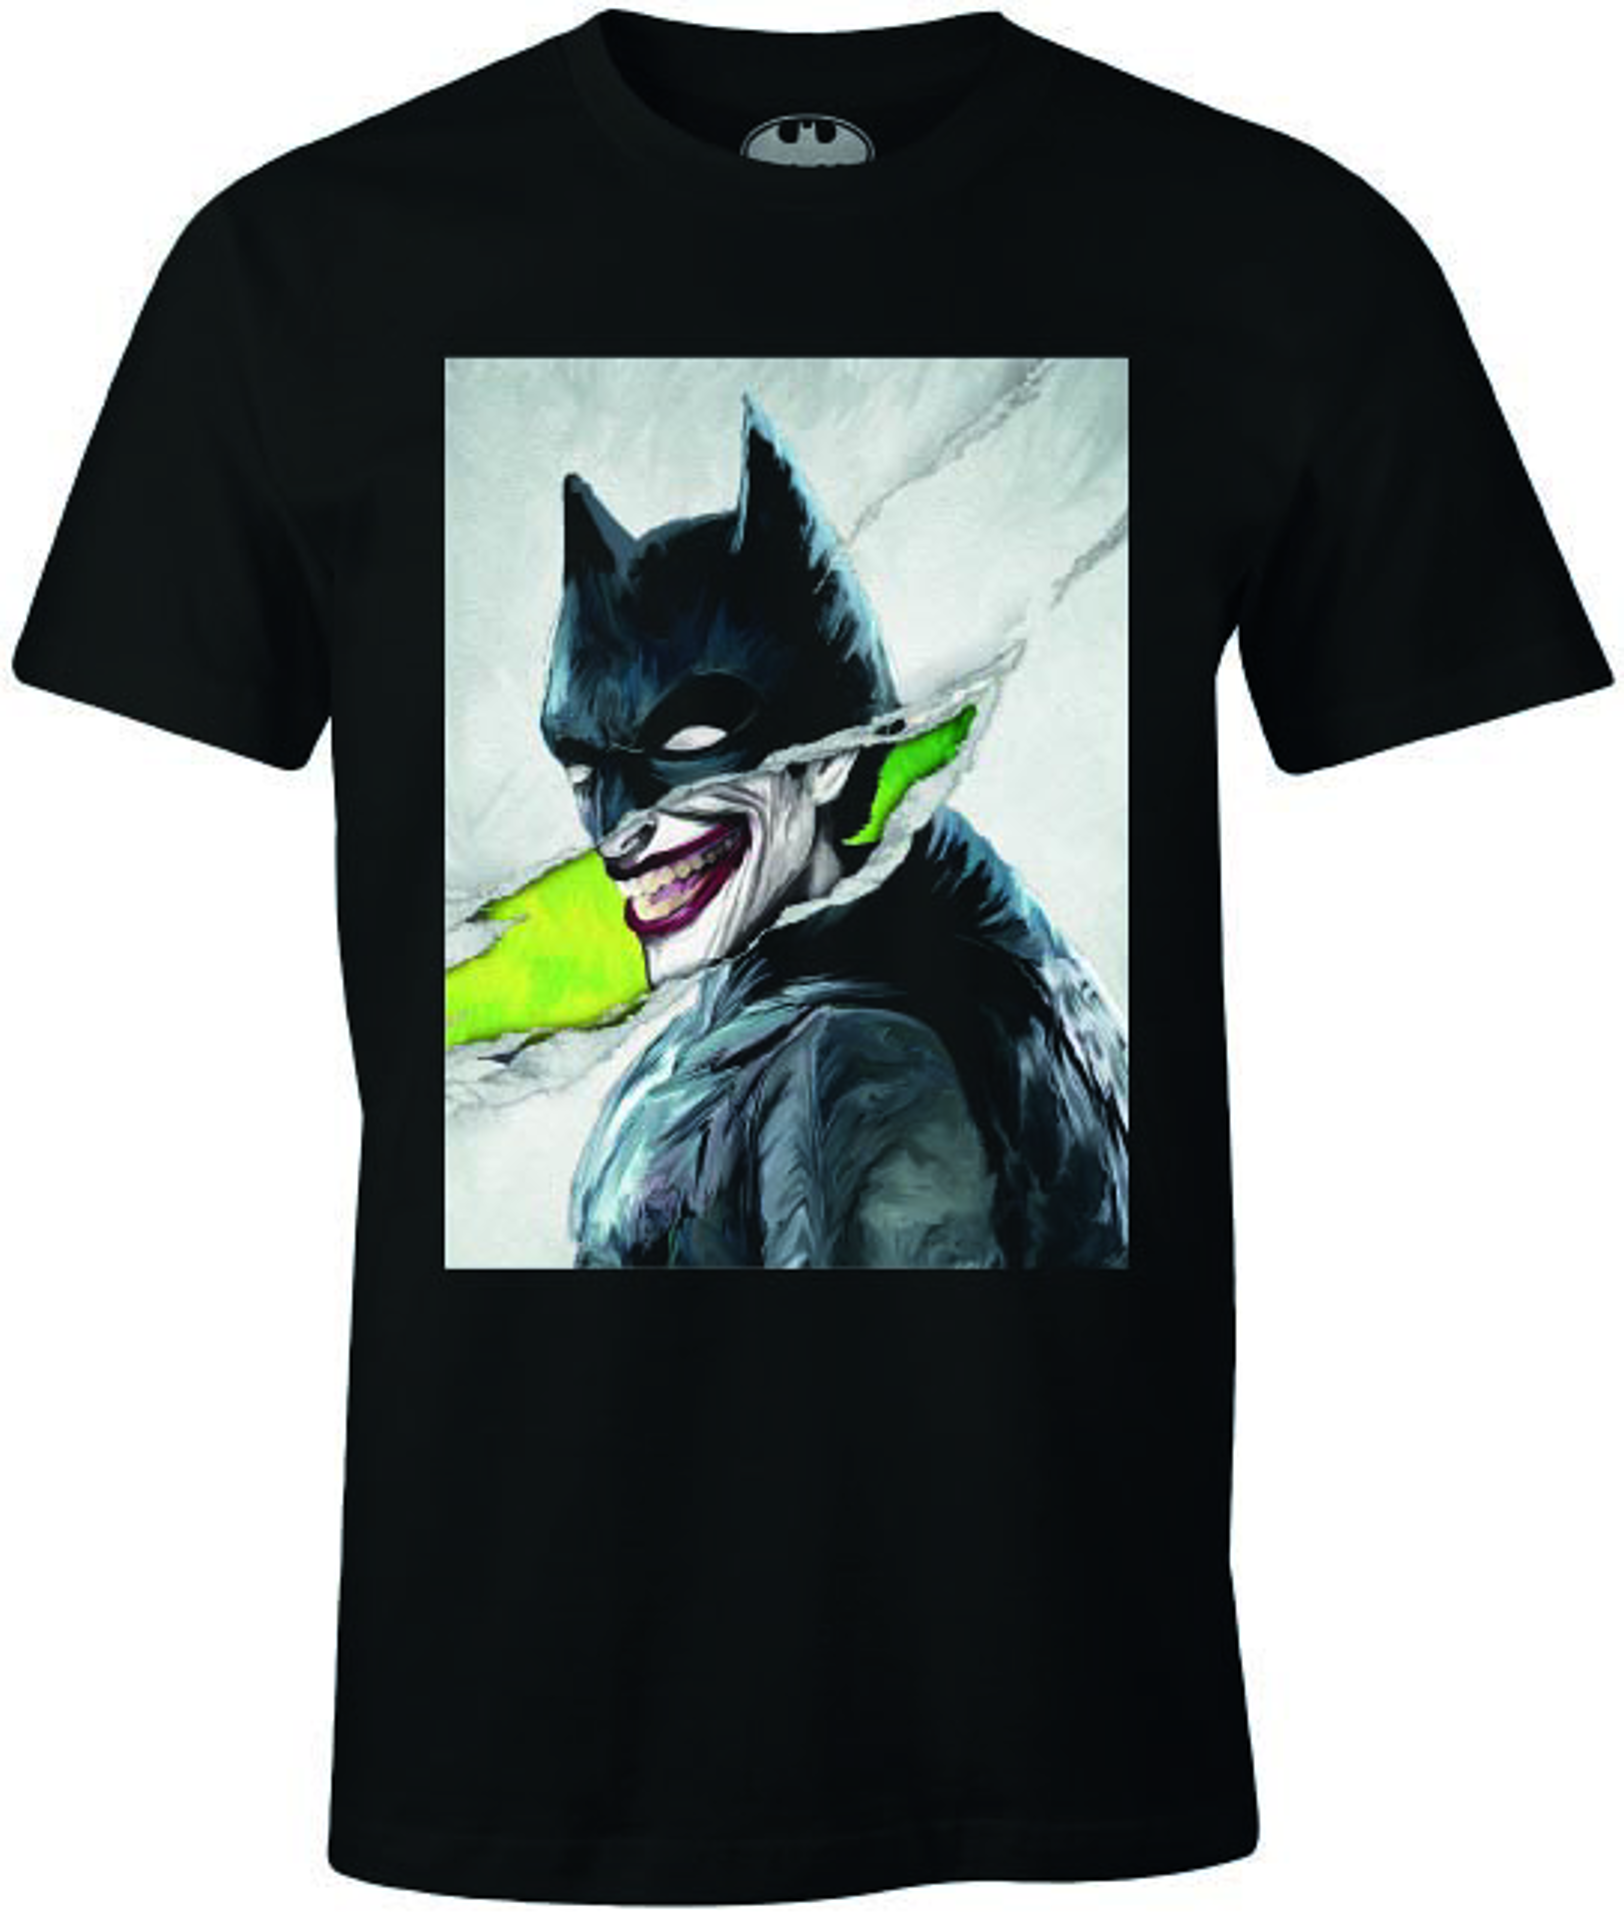 DC Comics - Batman - T-shirt Noir Hommes - Le Joker déguisé en Batman - XL